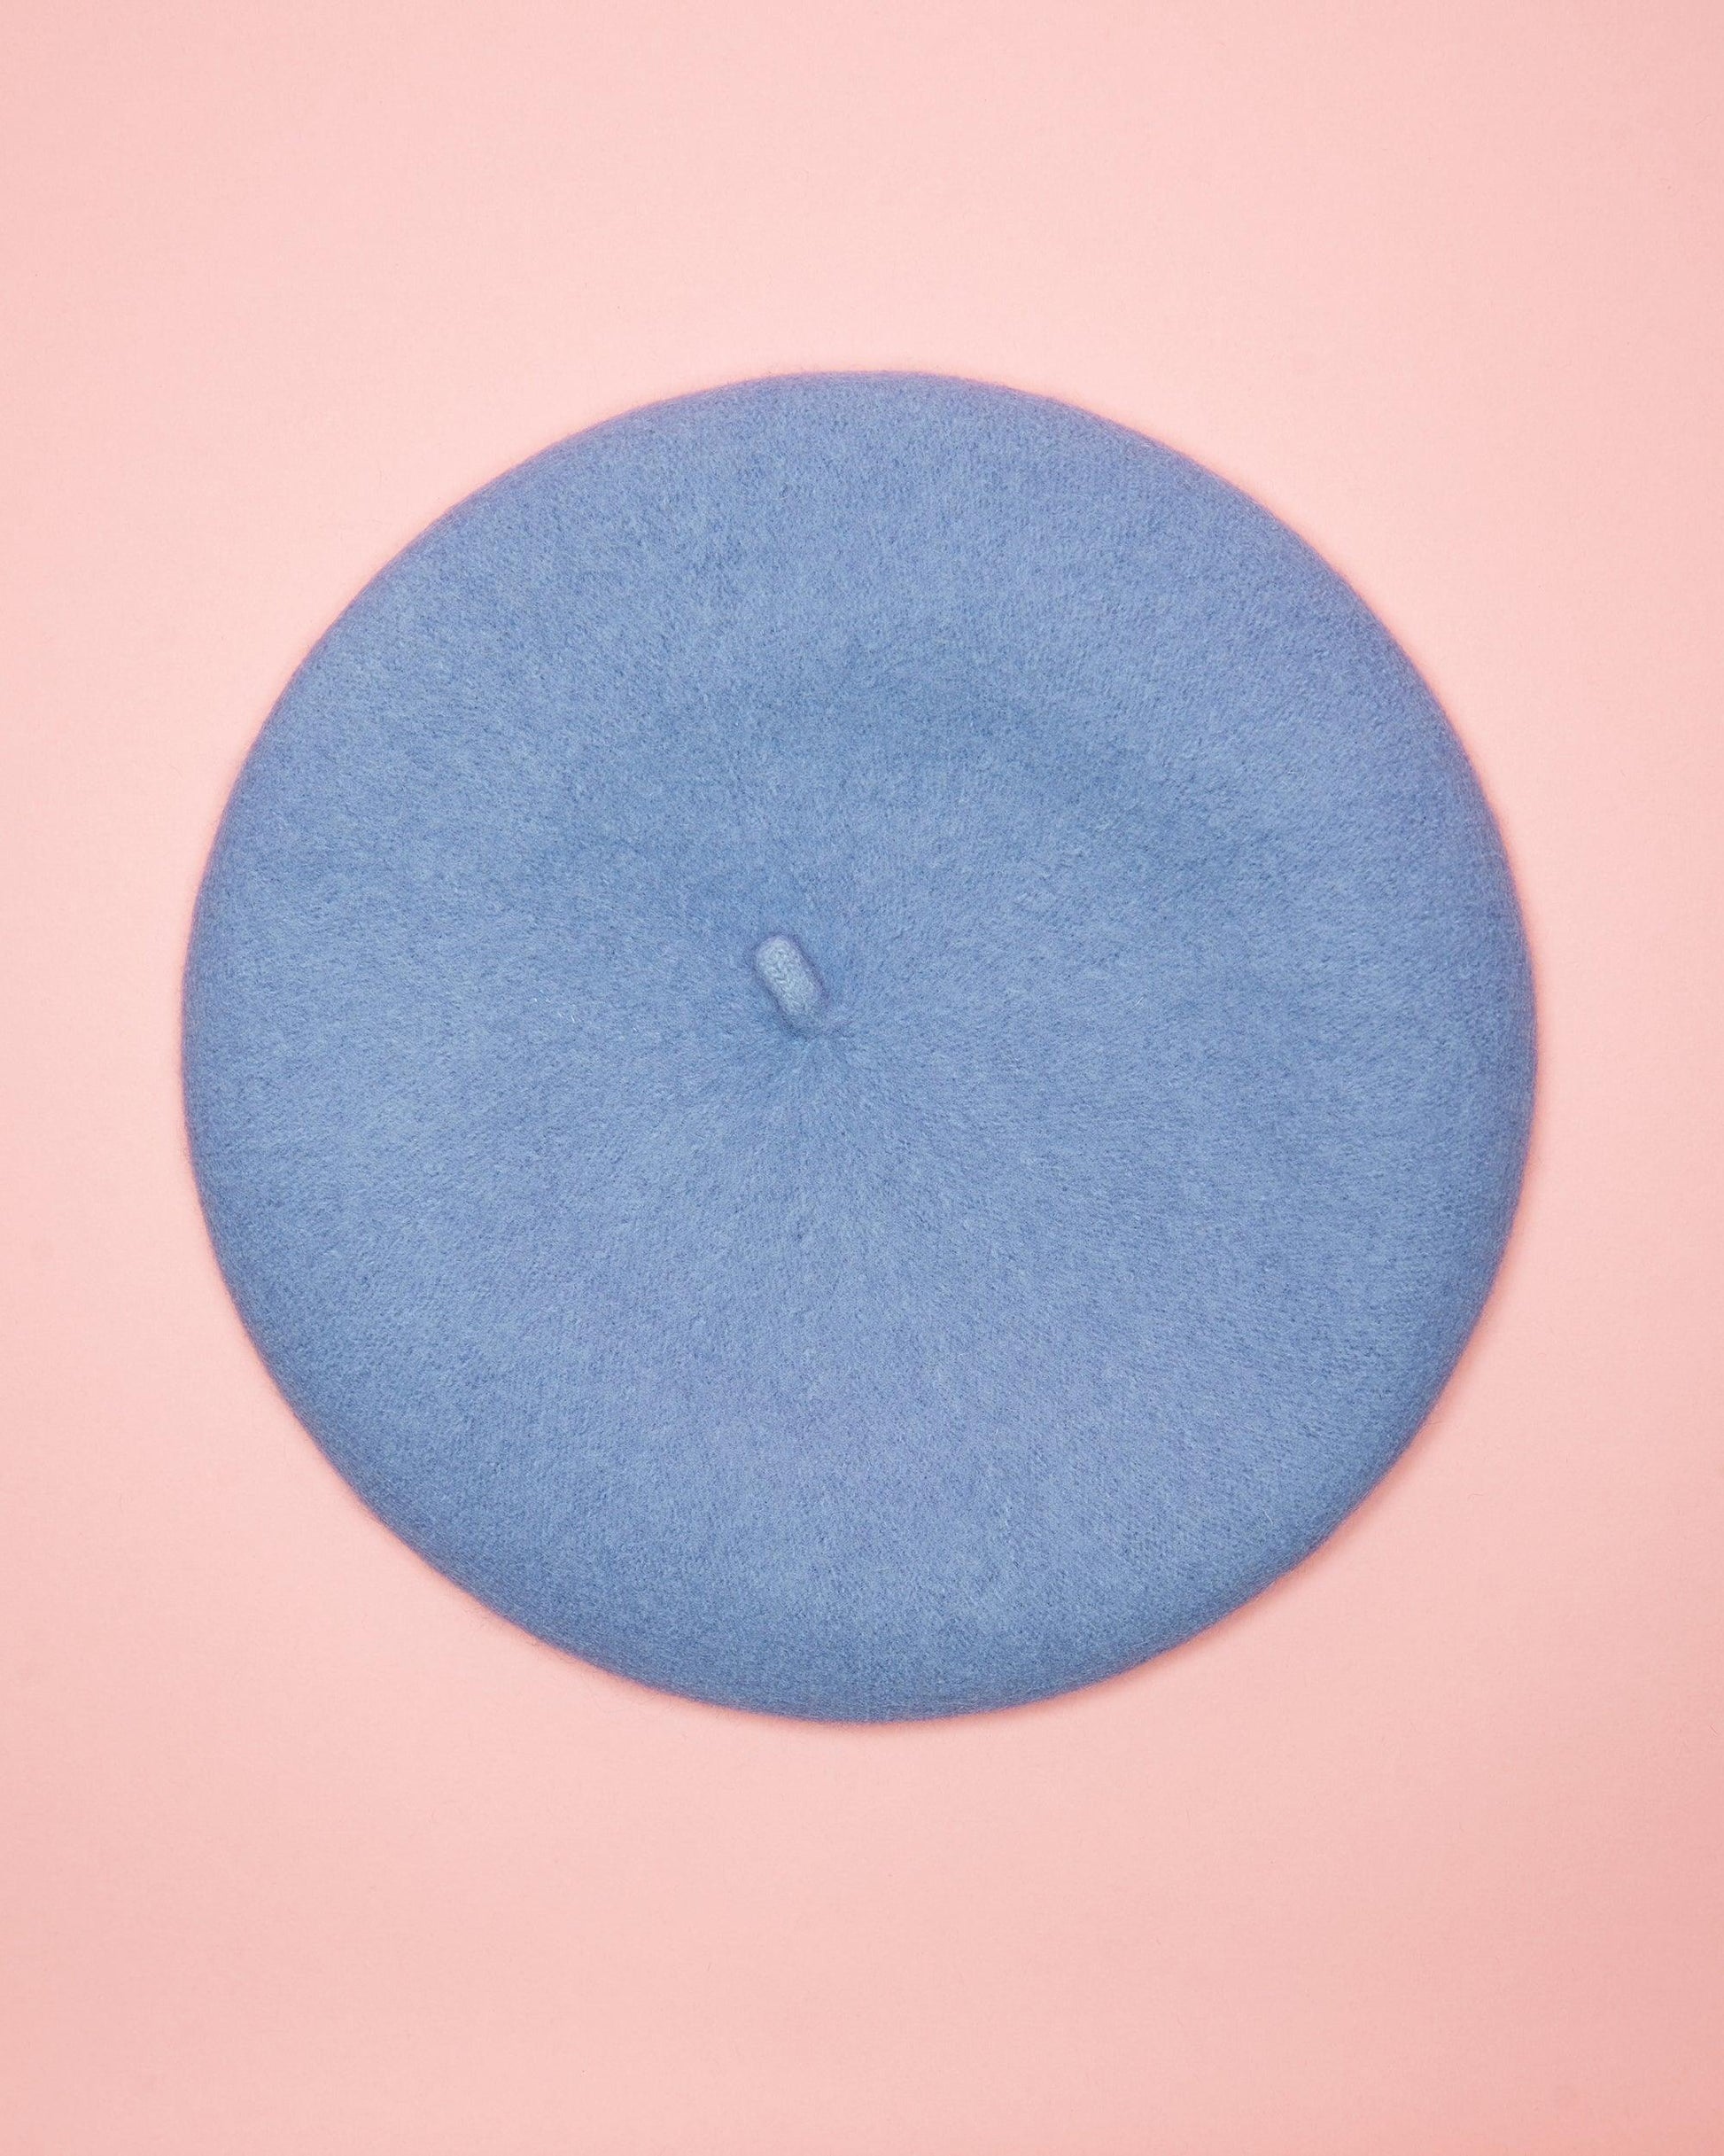 HOMO beret - light blue | One size fits all. - HOMOLONDON